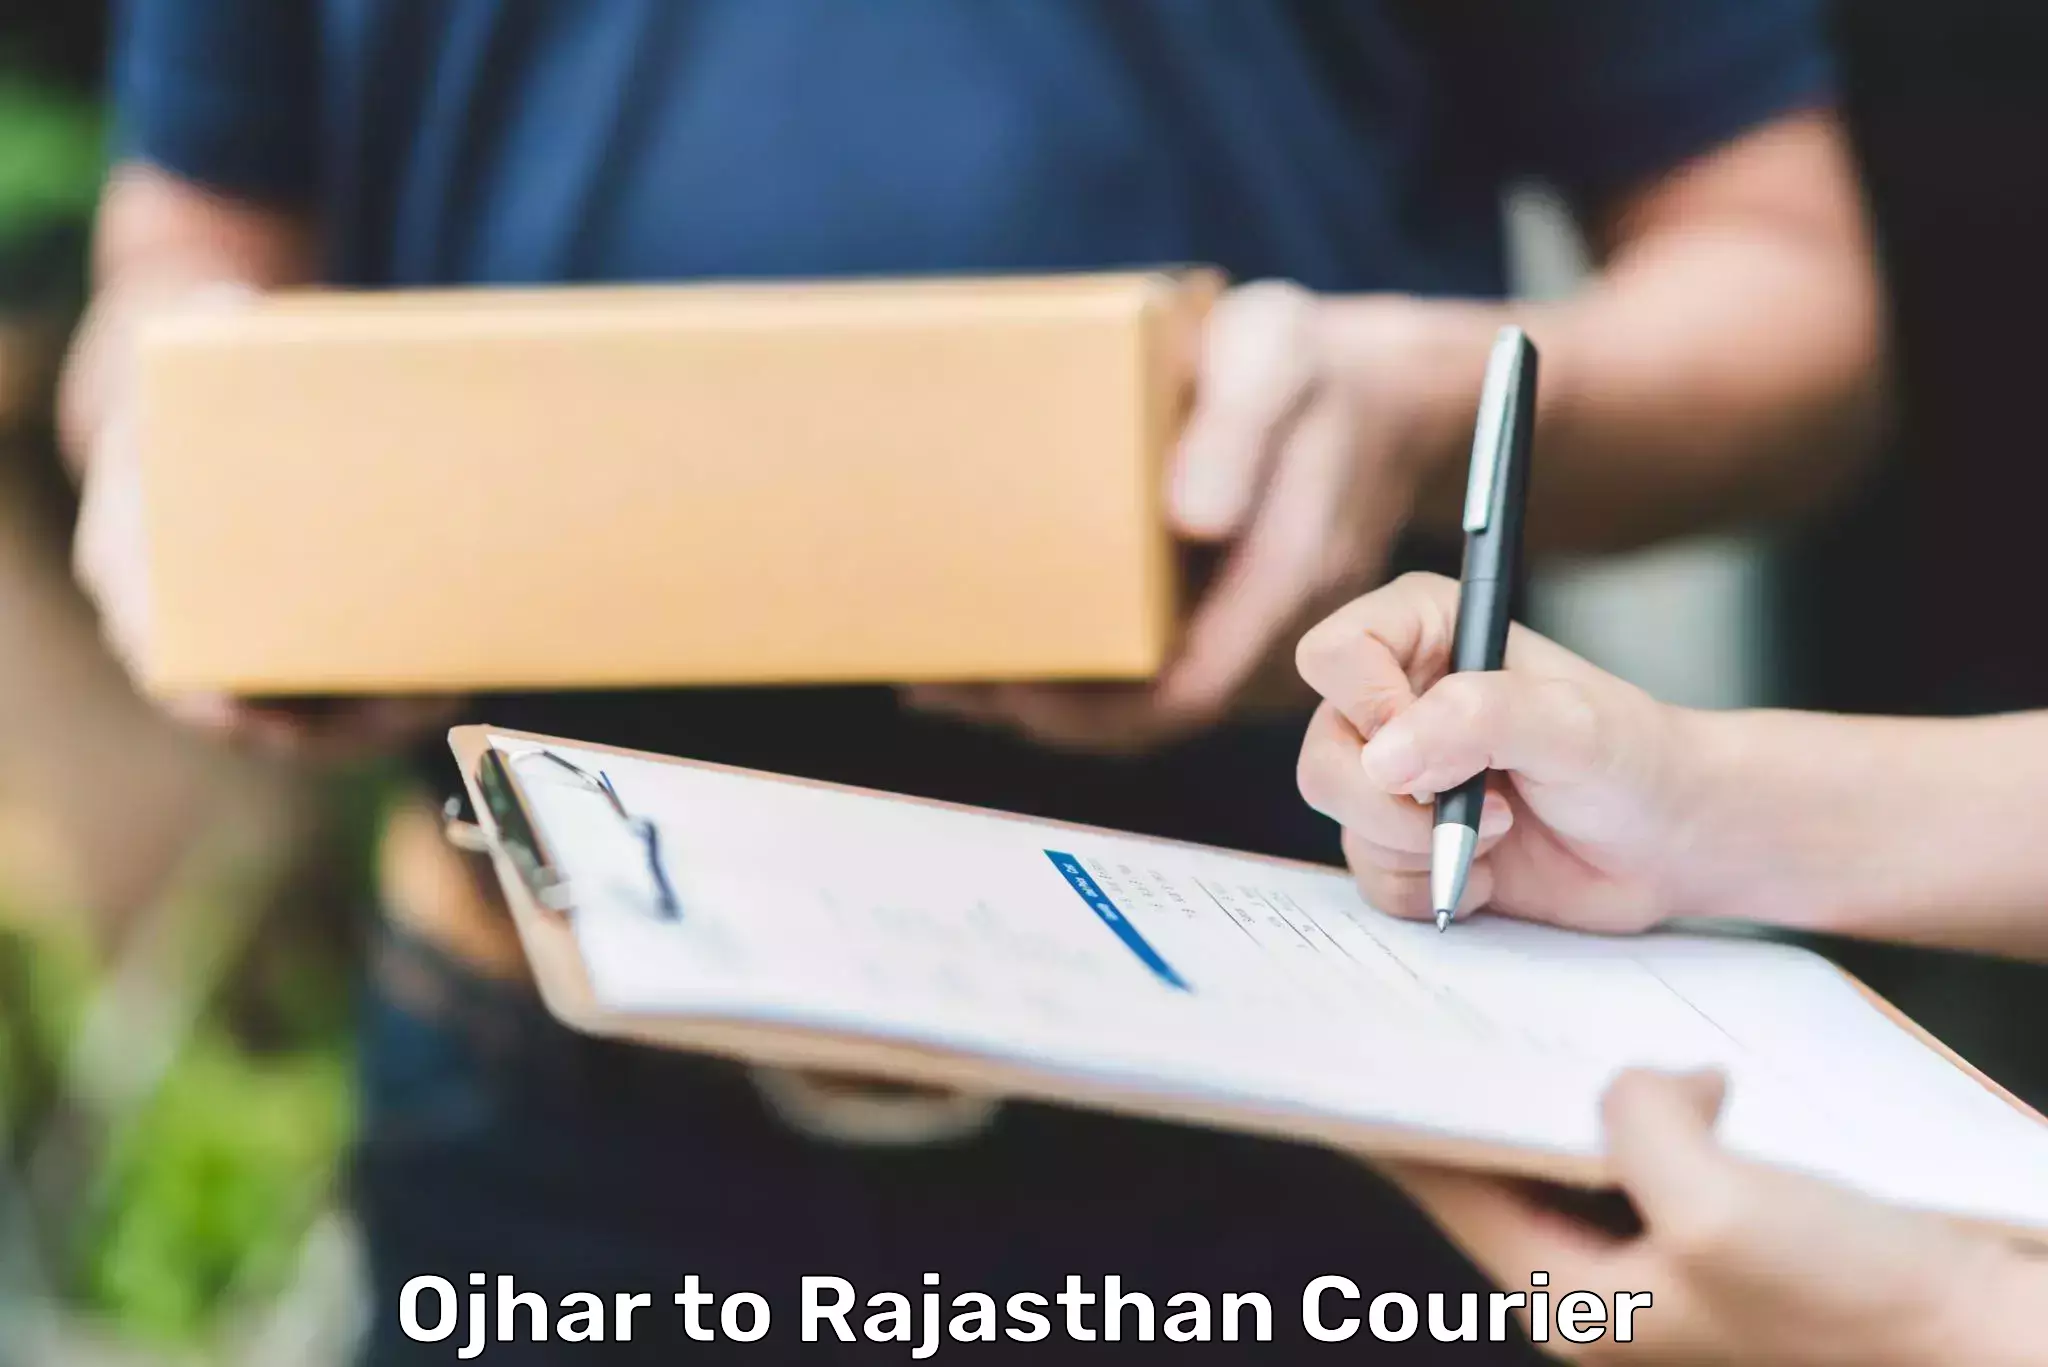 Quick dispatch service Ojhar to Udaipur